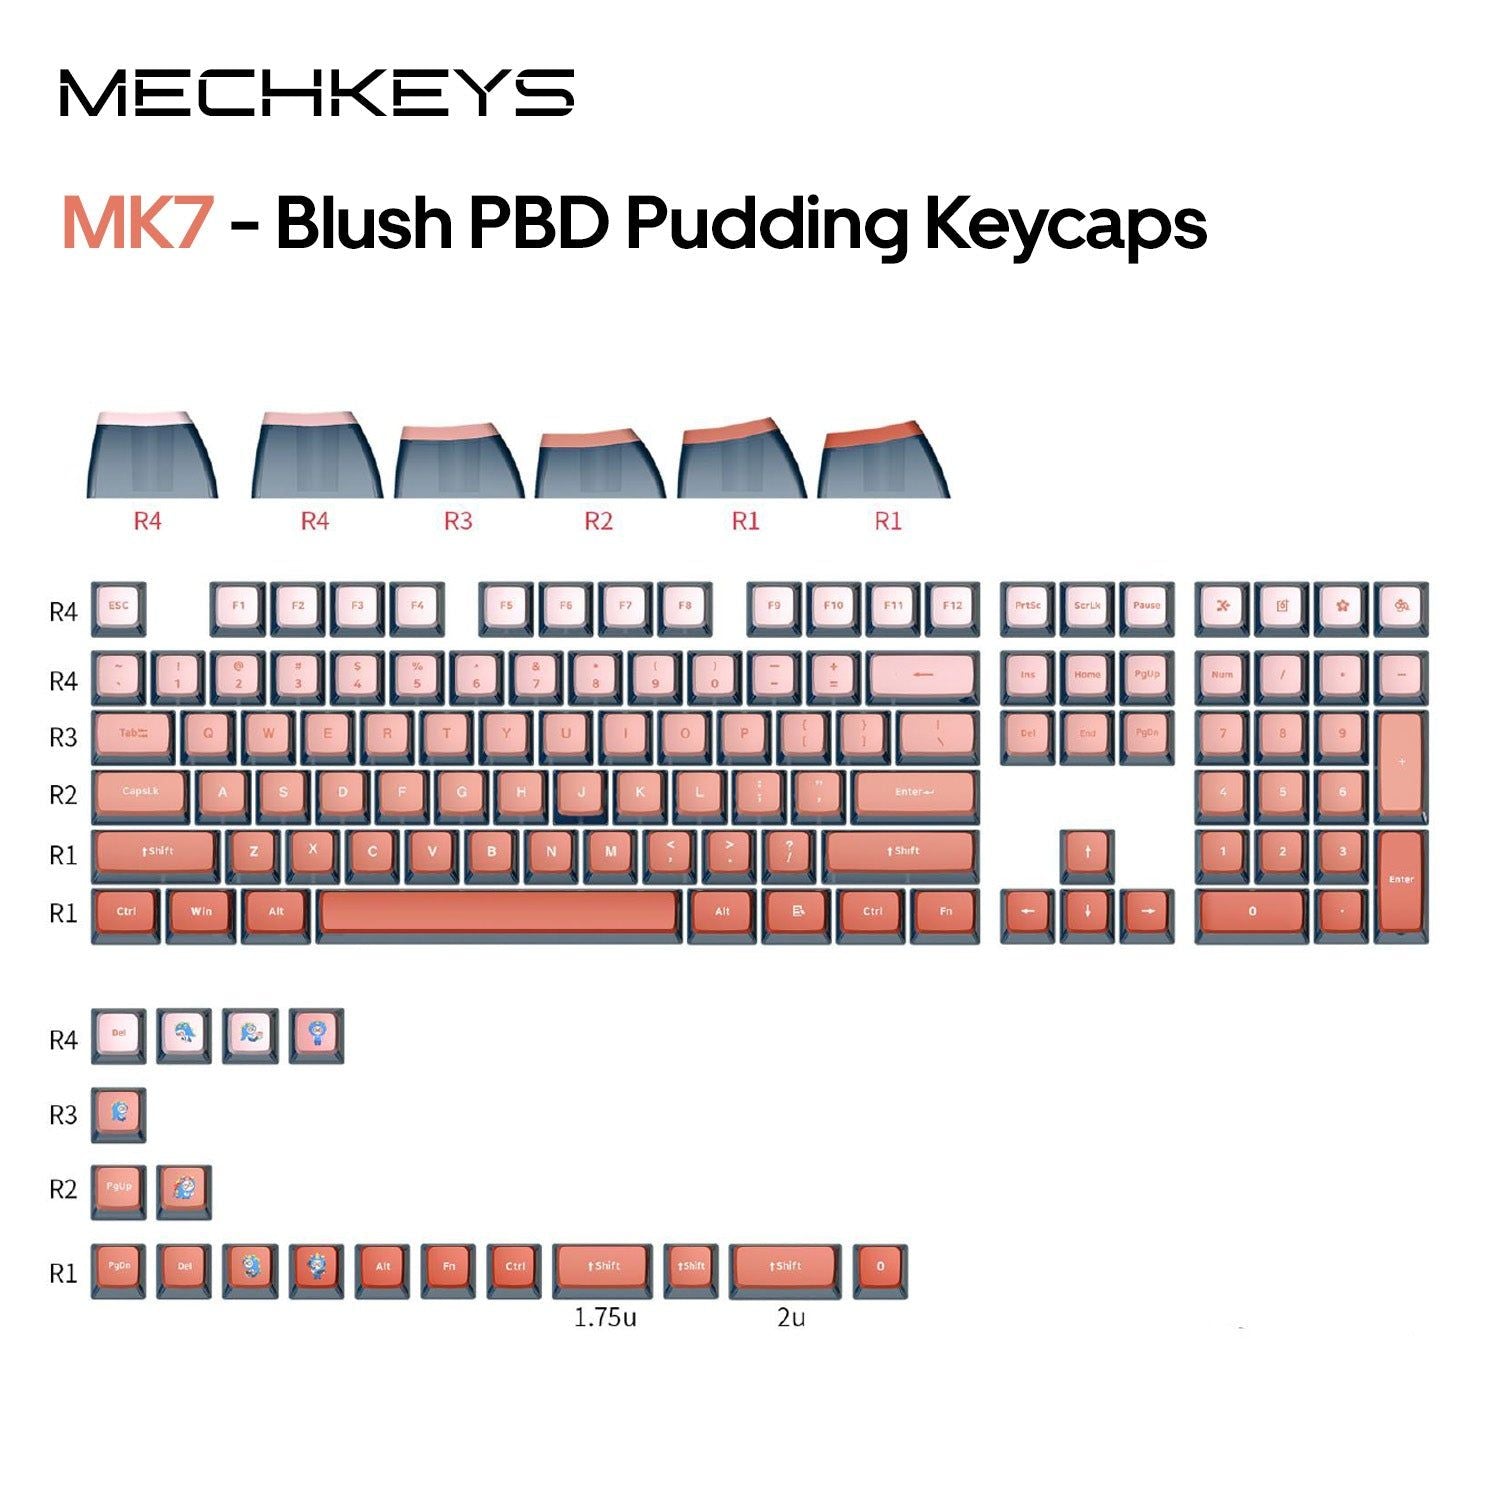 OVERCLOCK MECHKEYS Blush PBT Pudding Keycaps - OVERCLOCK Computer